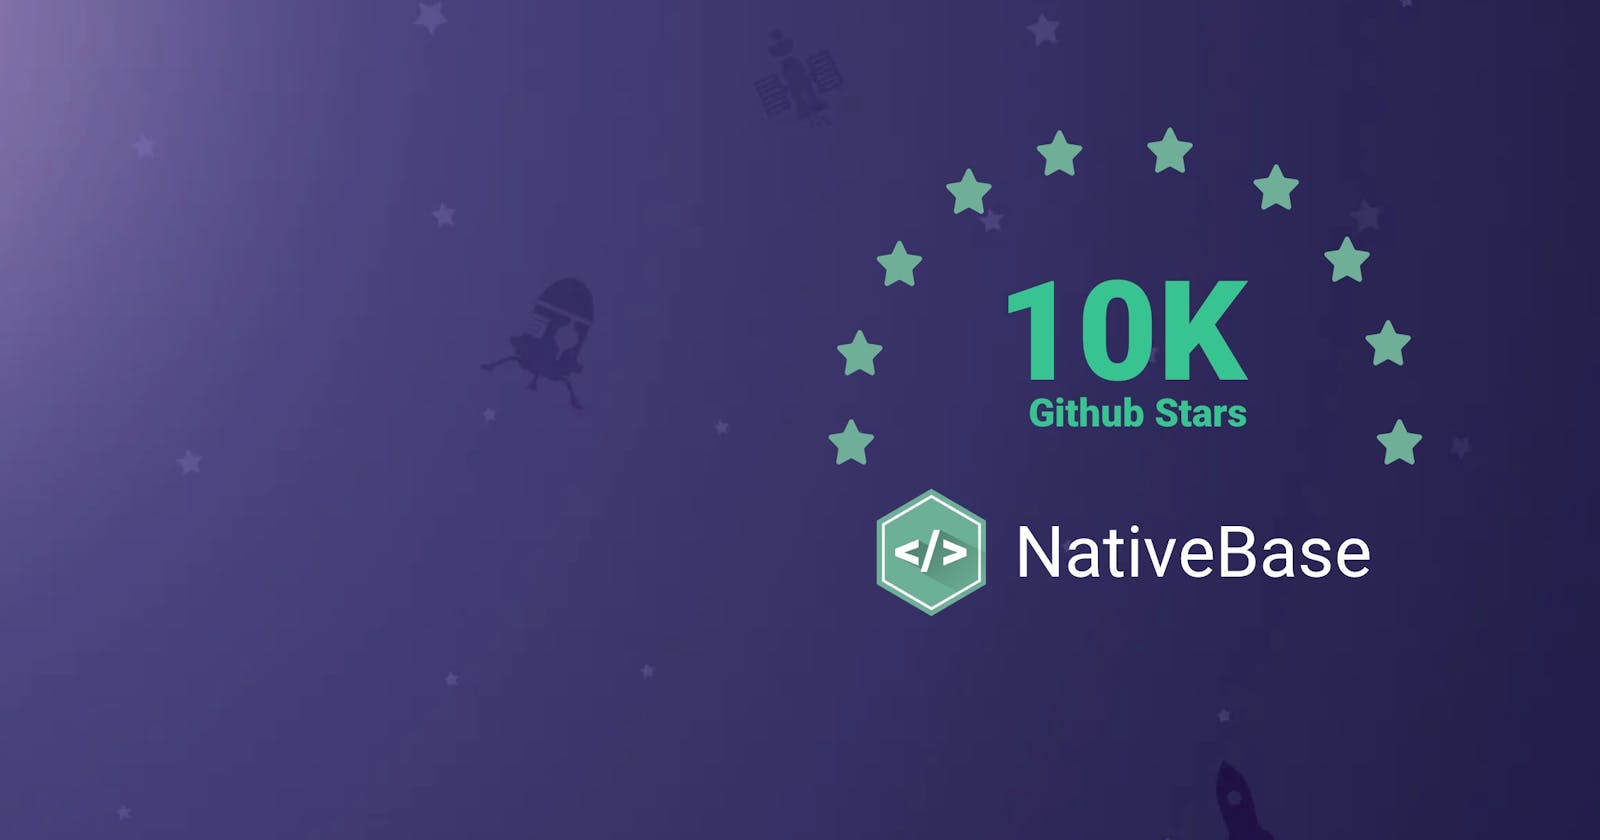 NativeBase- An Odyssey Through 10,000 Stars